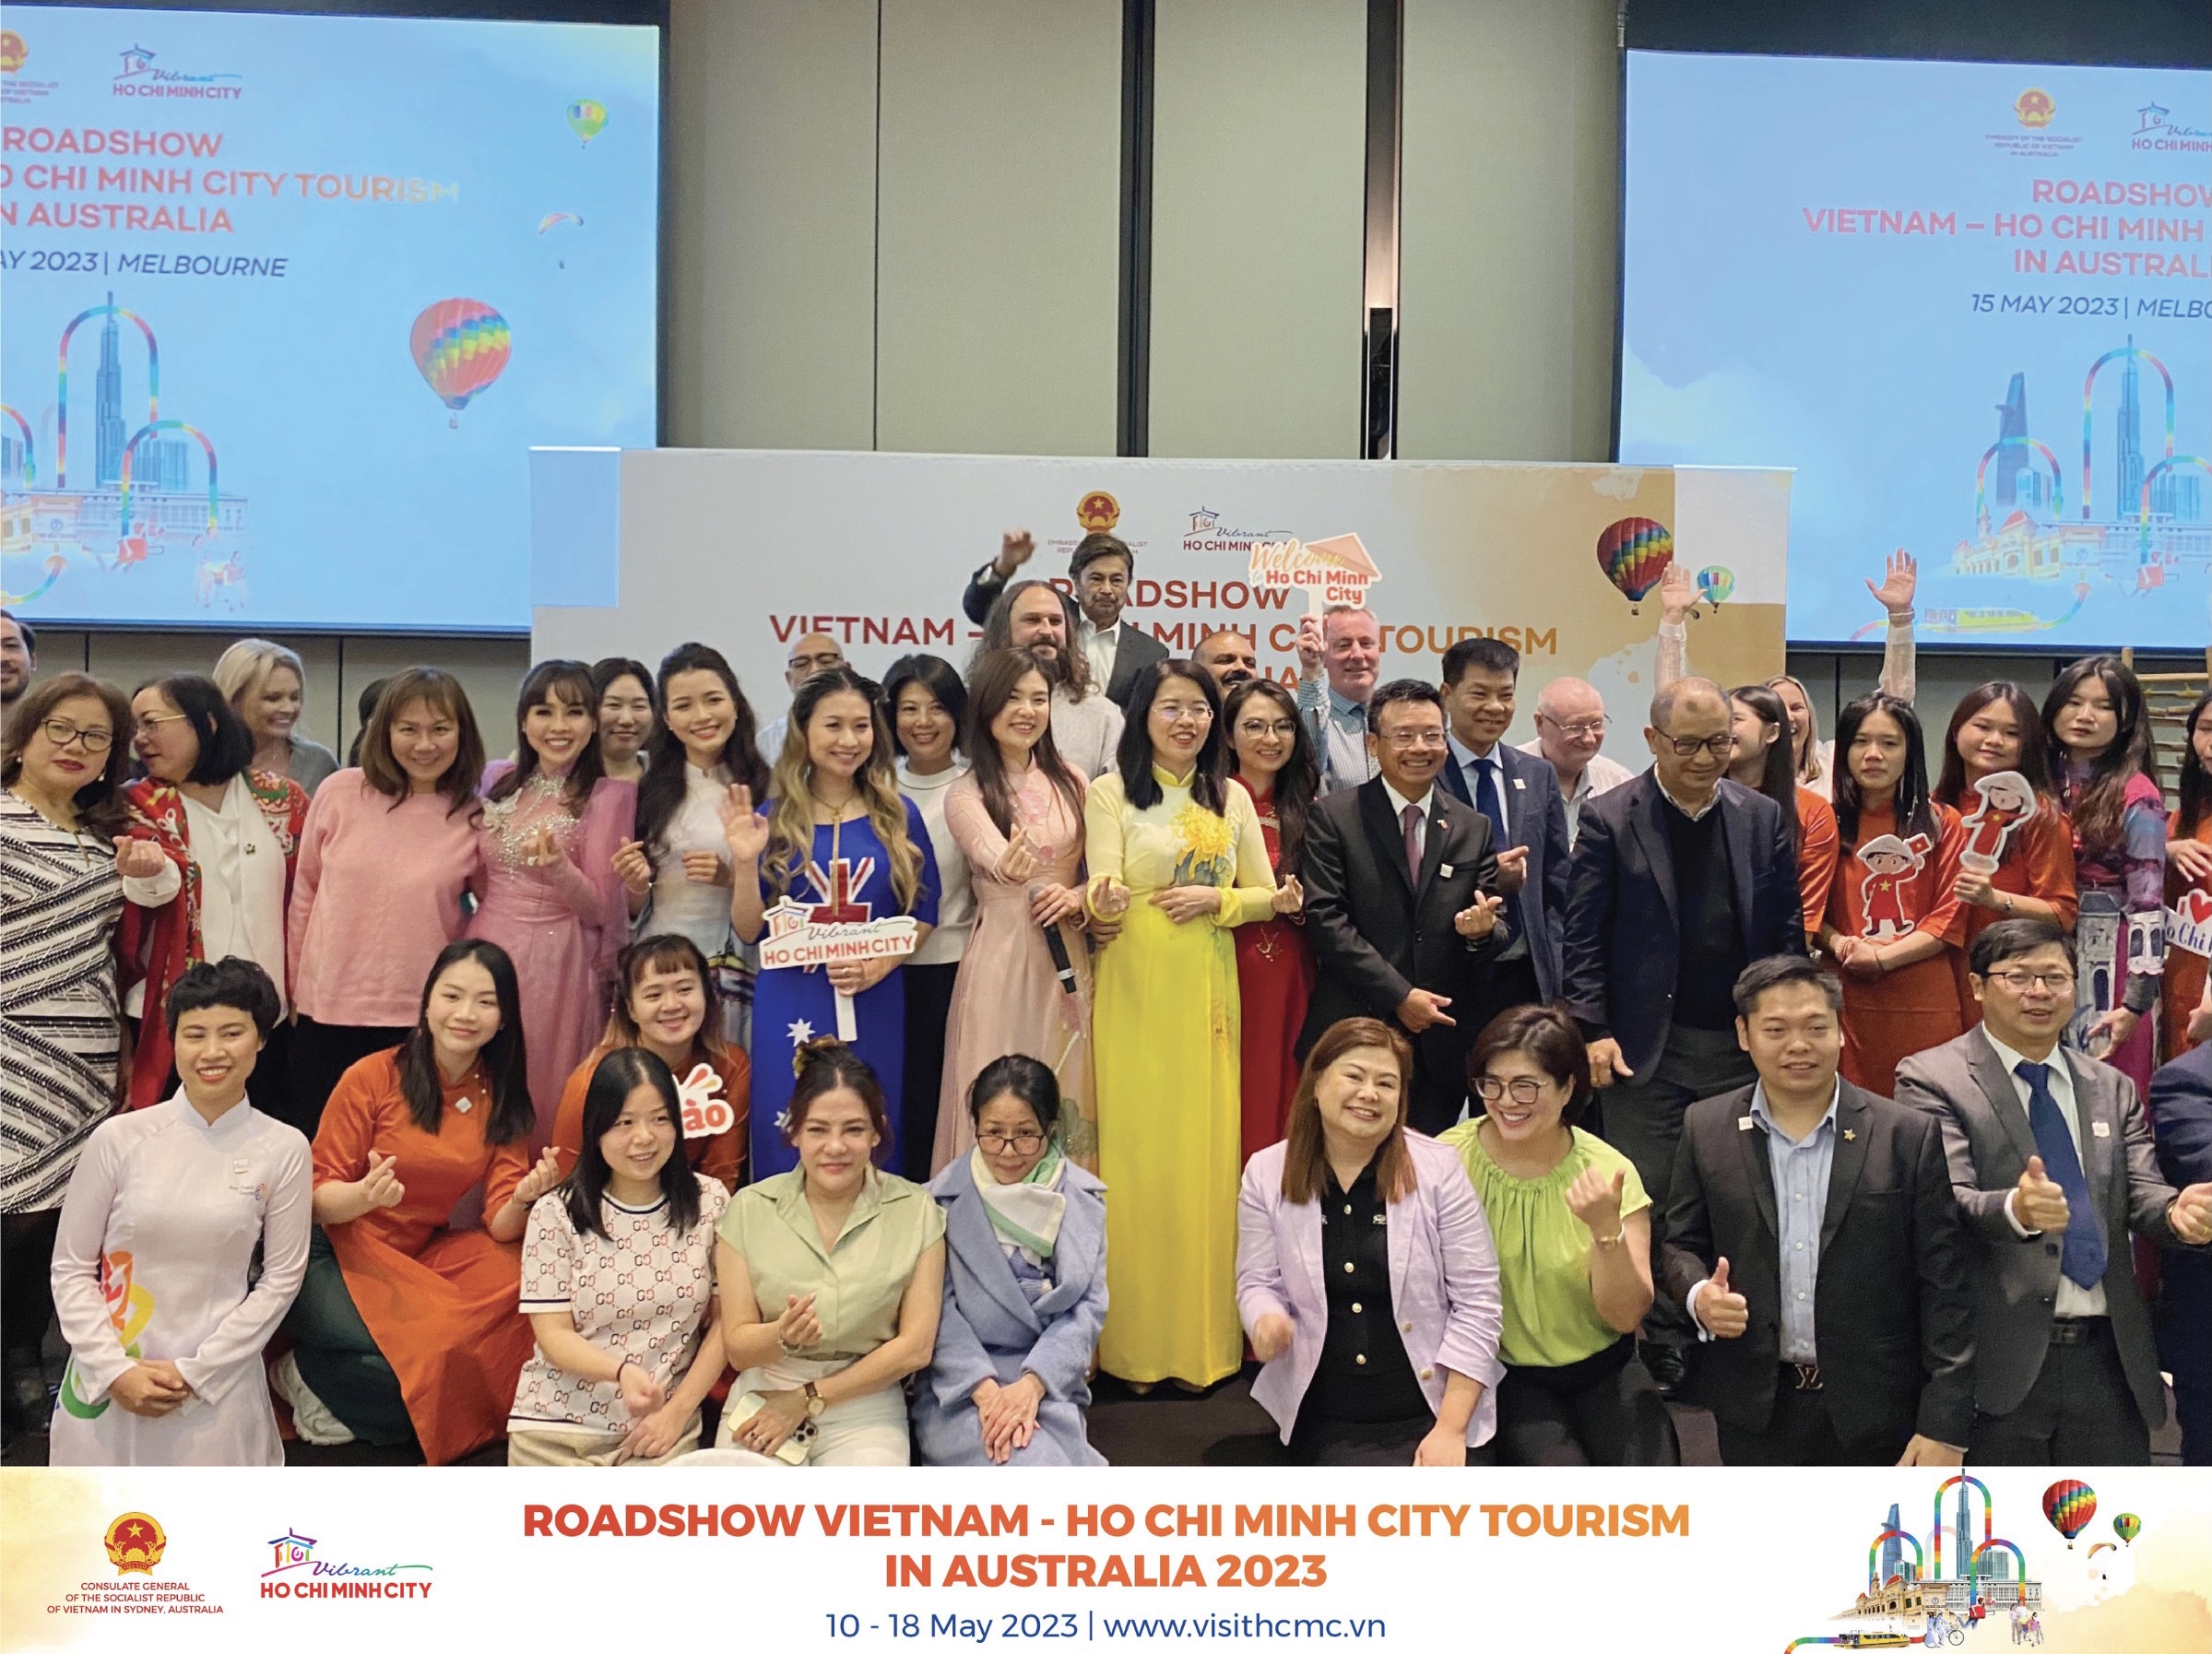 ROADSHOW VIETNAM - HO CHI MINH CITY TOURISM IN AUSTRALIA 2023 ACHIEVES GREAT SUCCESS